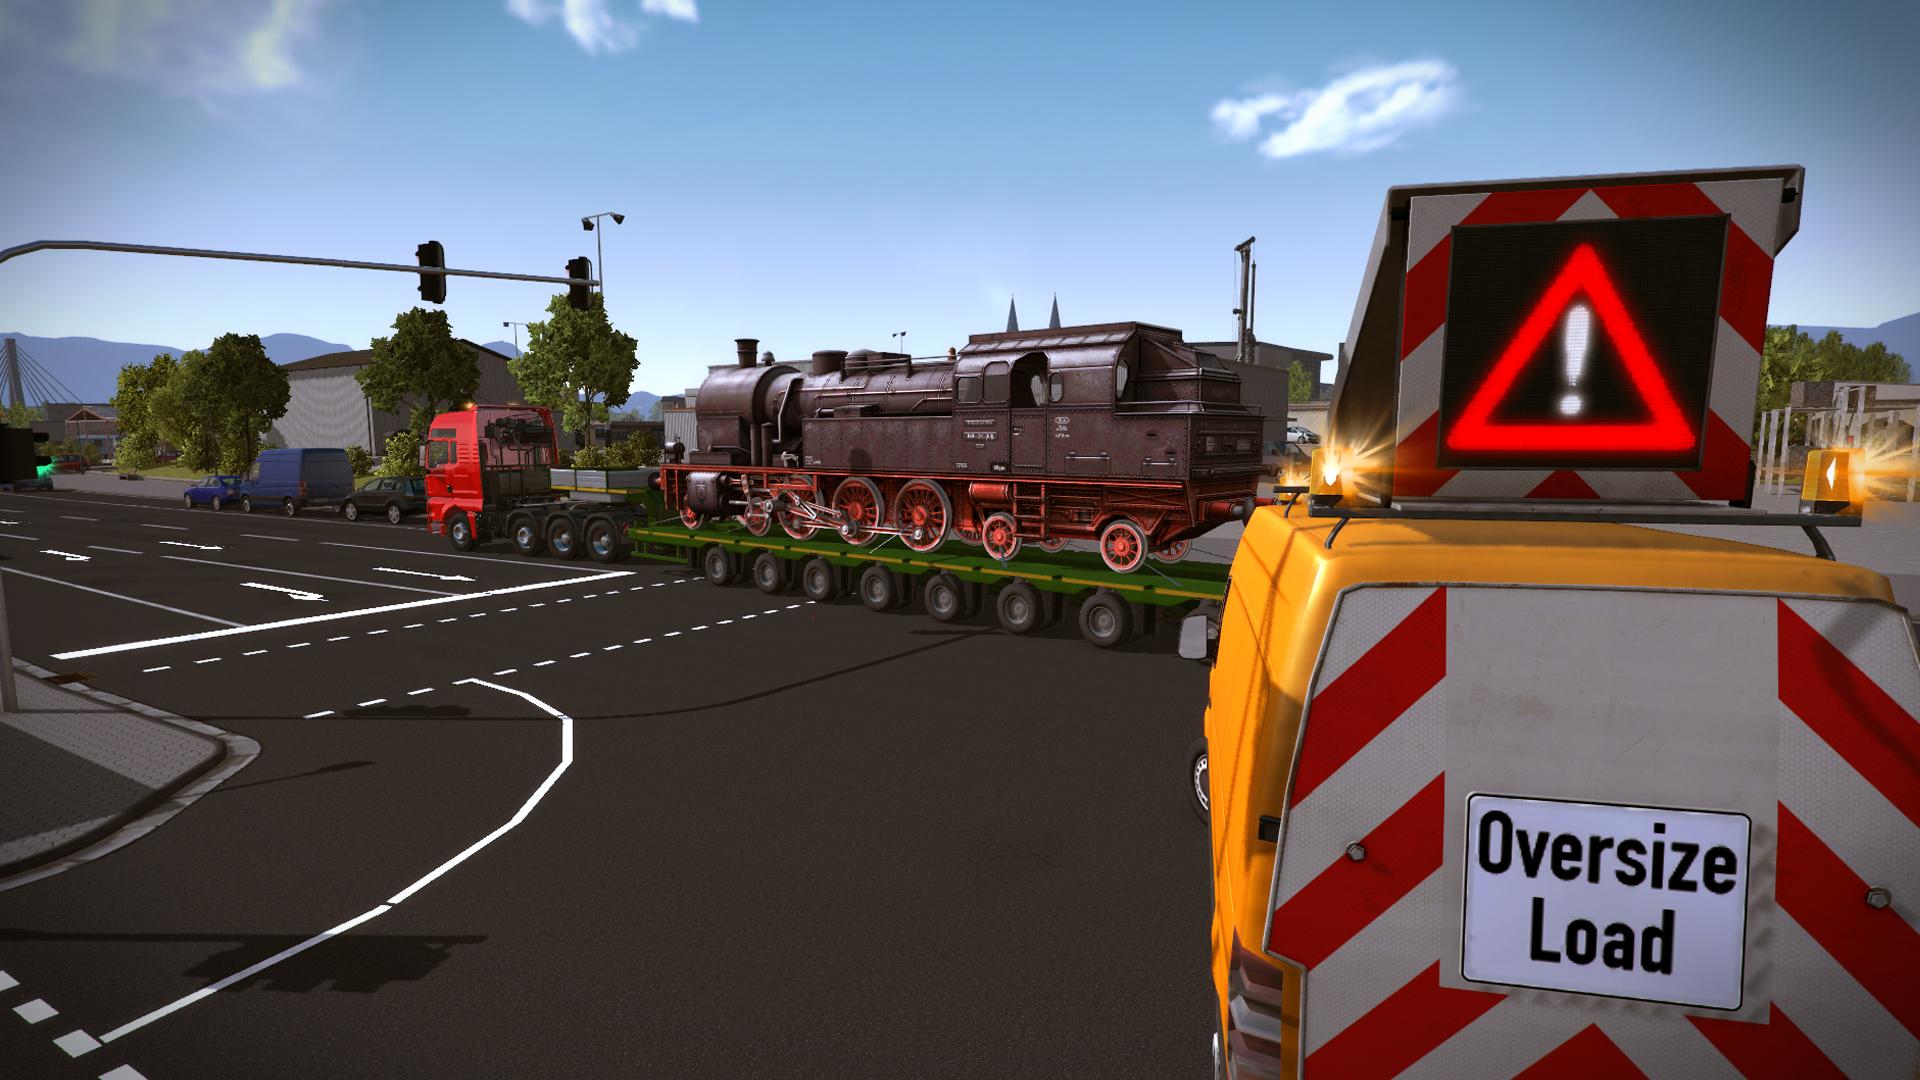 Screenshot №11 from game Construction Simulator 2015